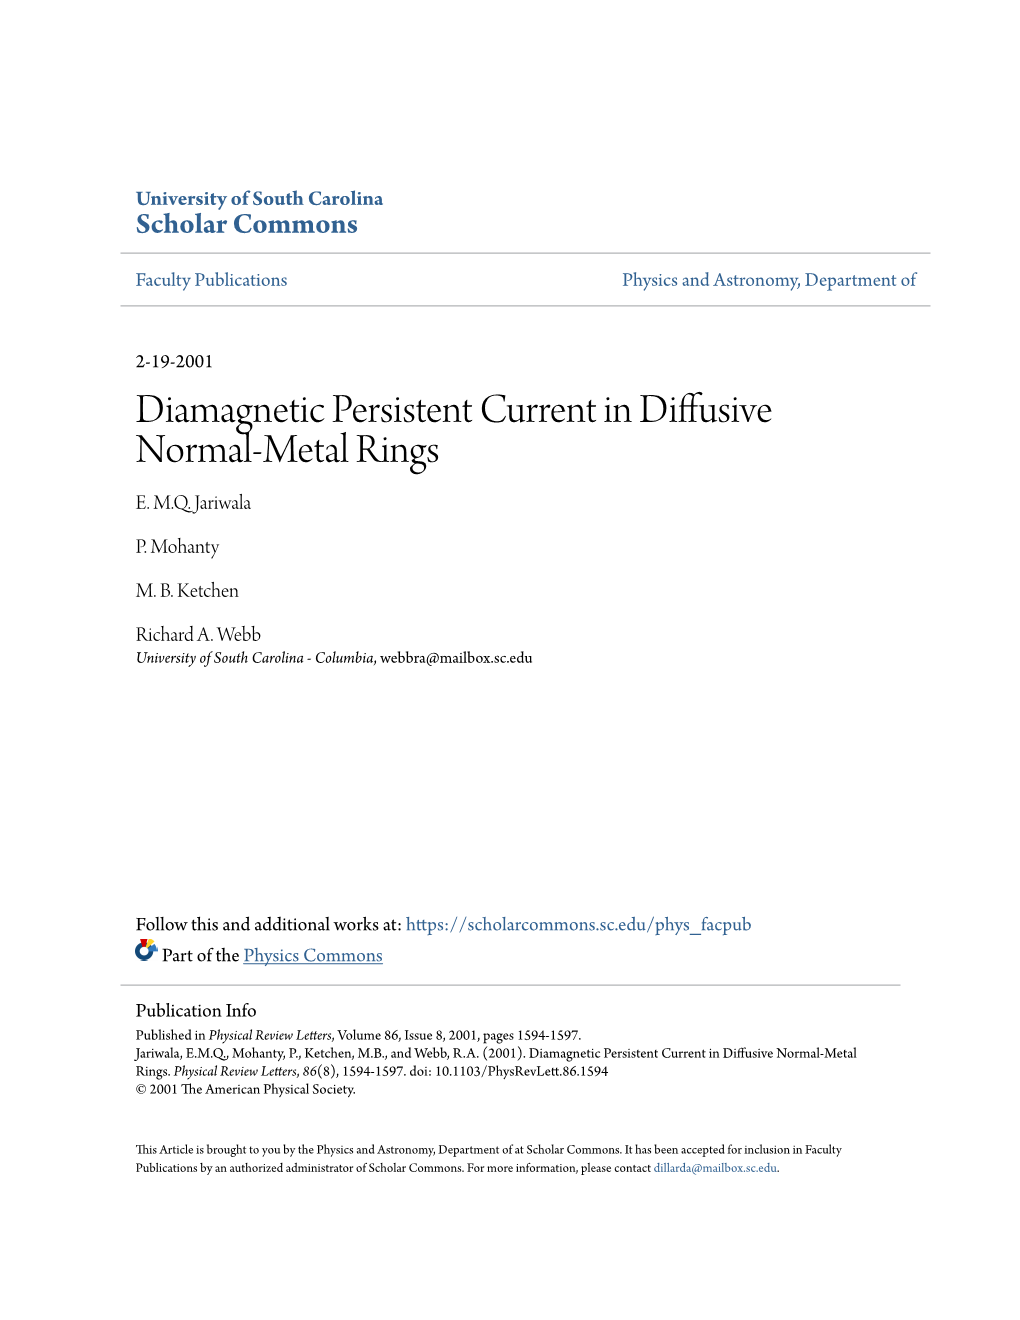 Diamagnetic Persistent Current in Diffusive Normal-Metal Rings E